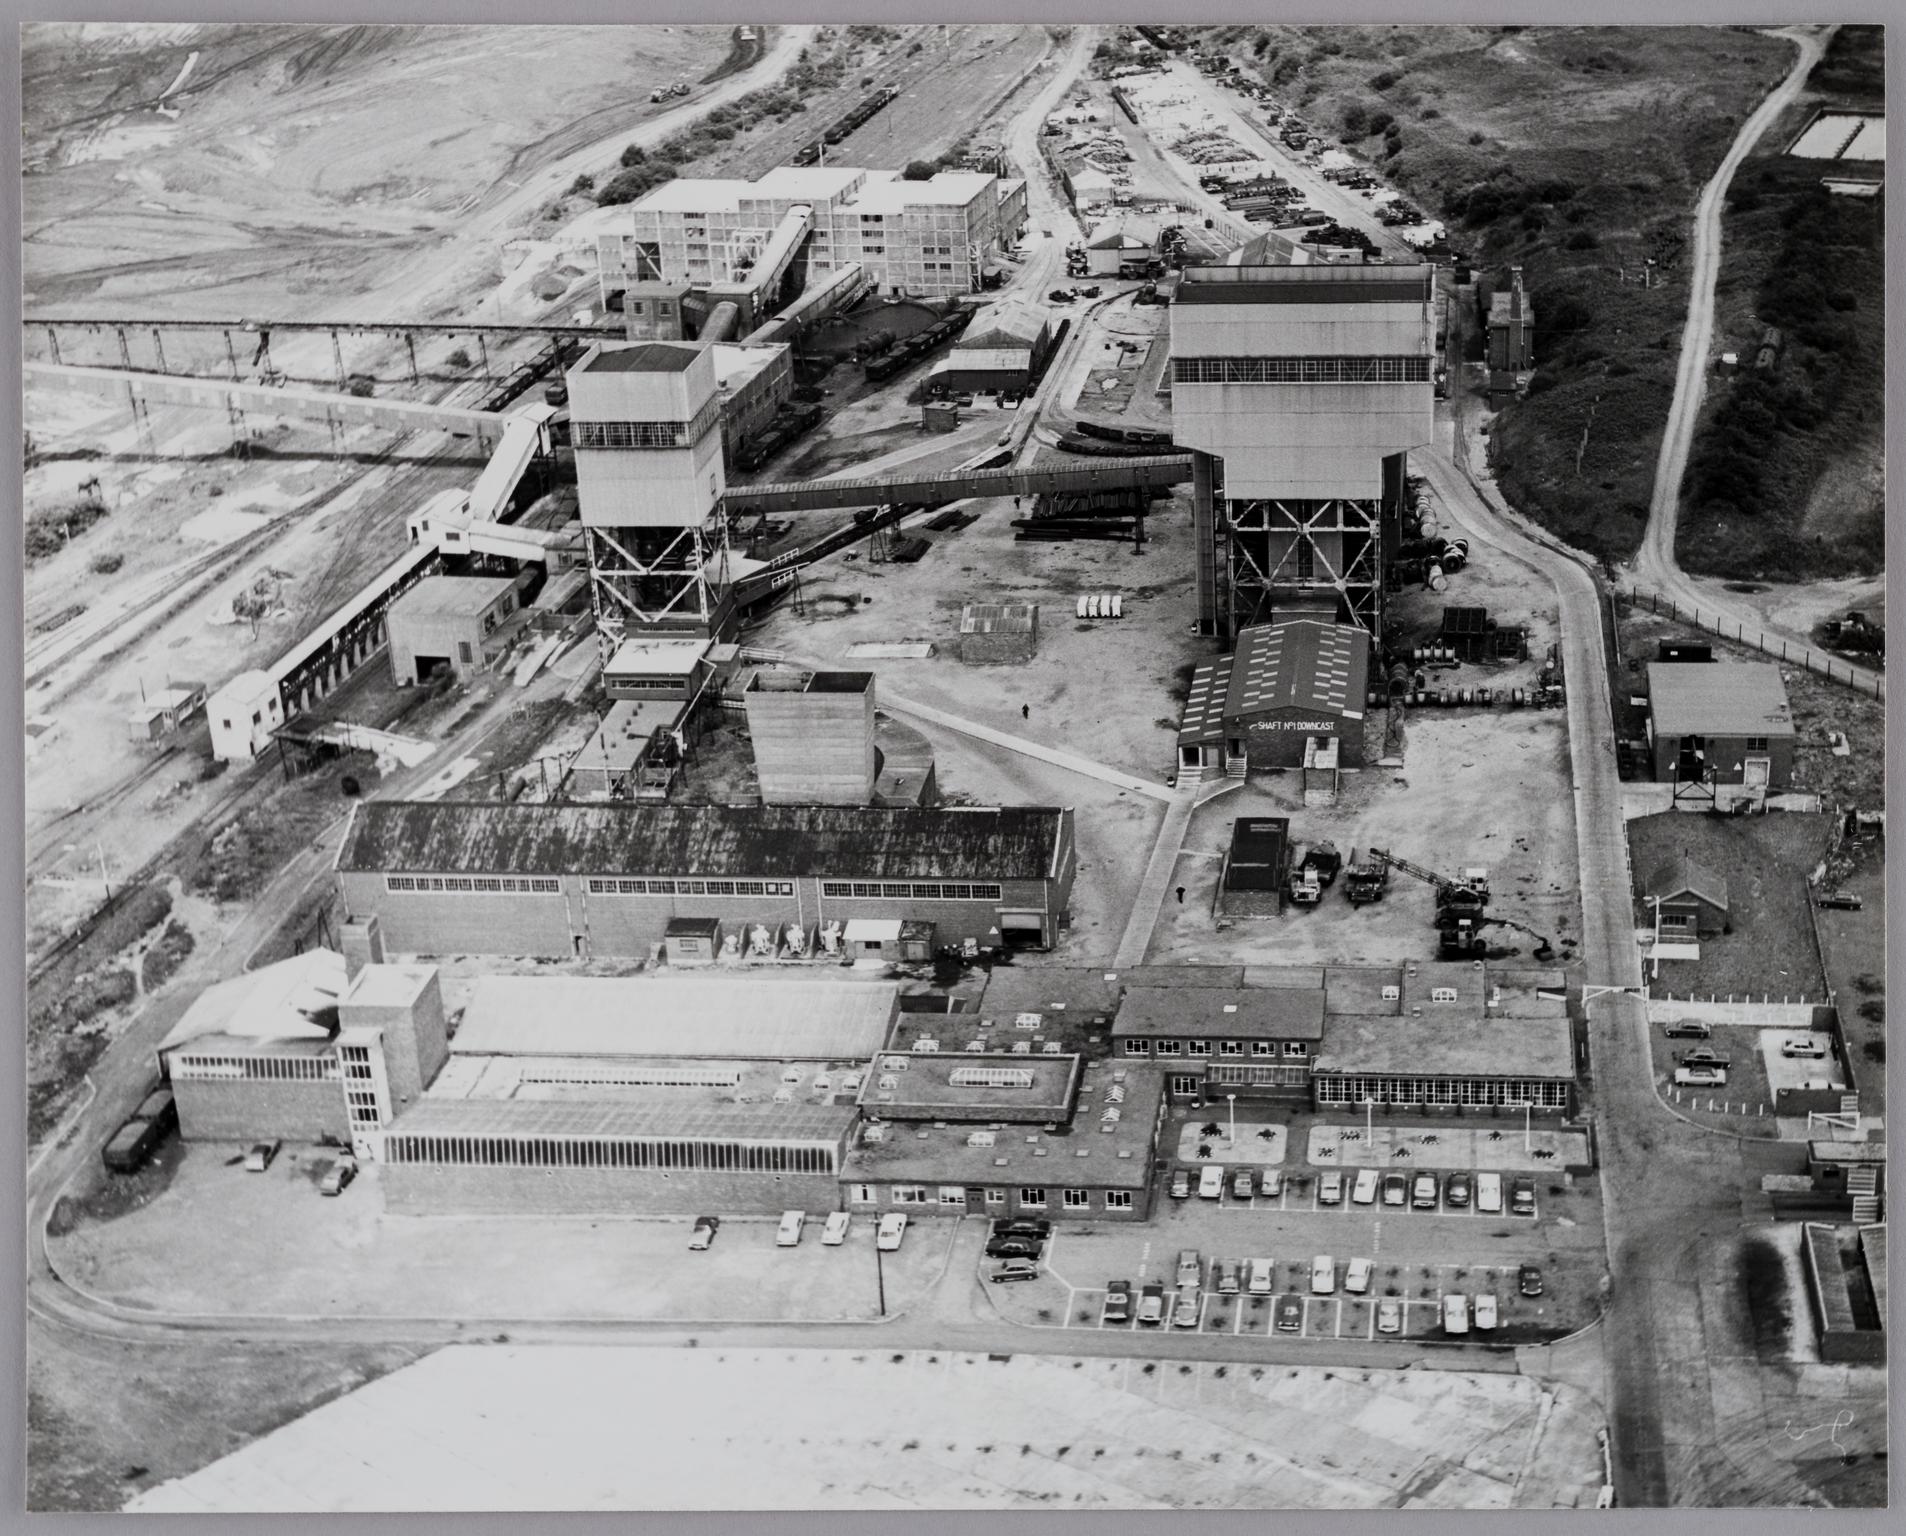 Cynheidre Colliery, photograph